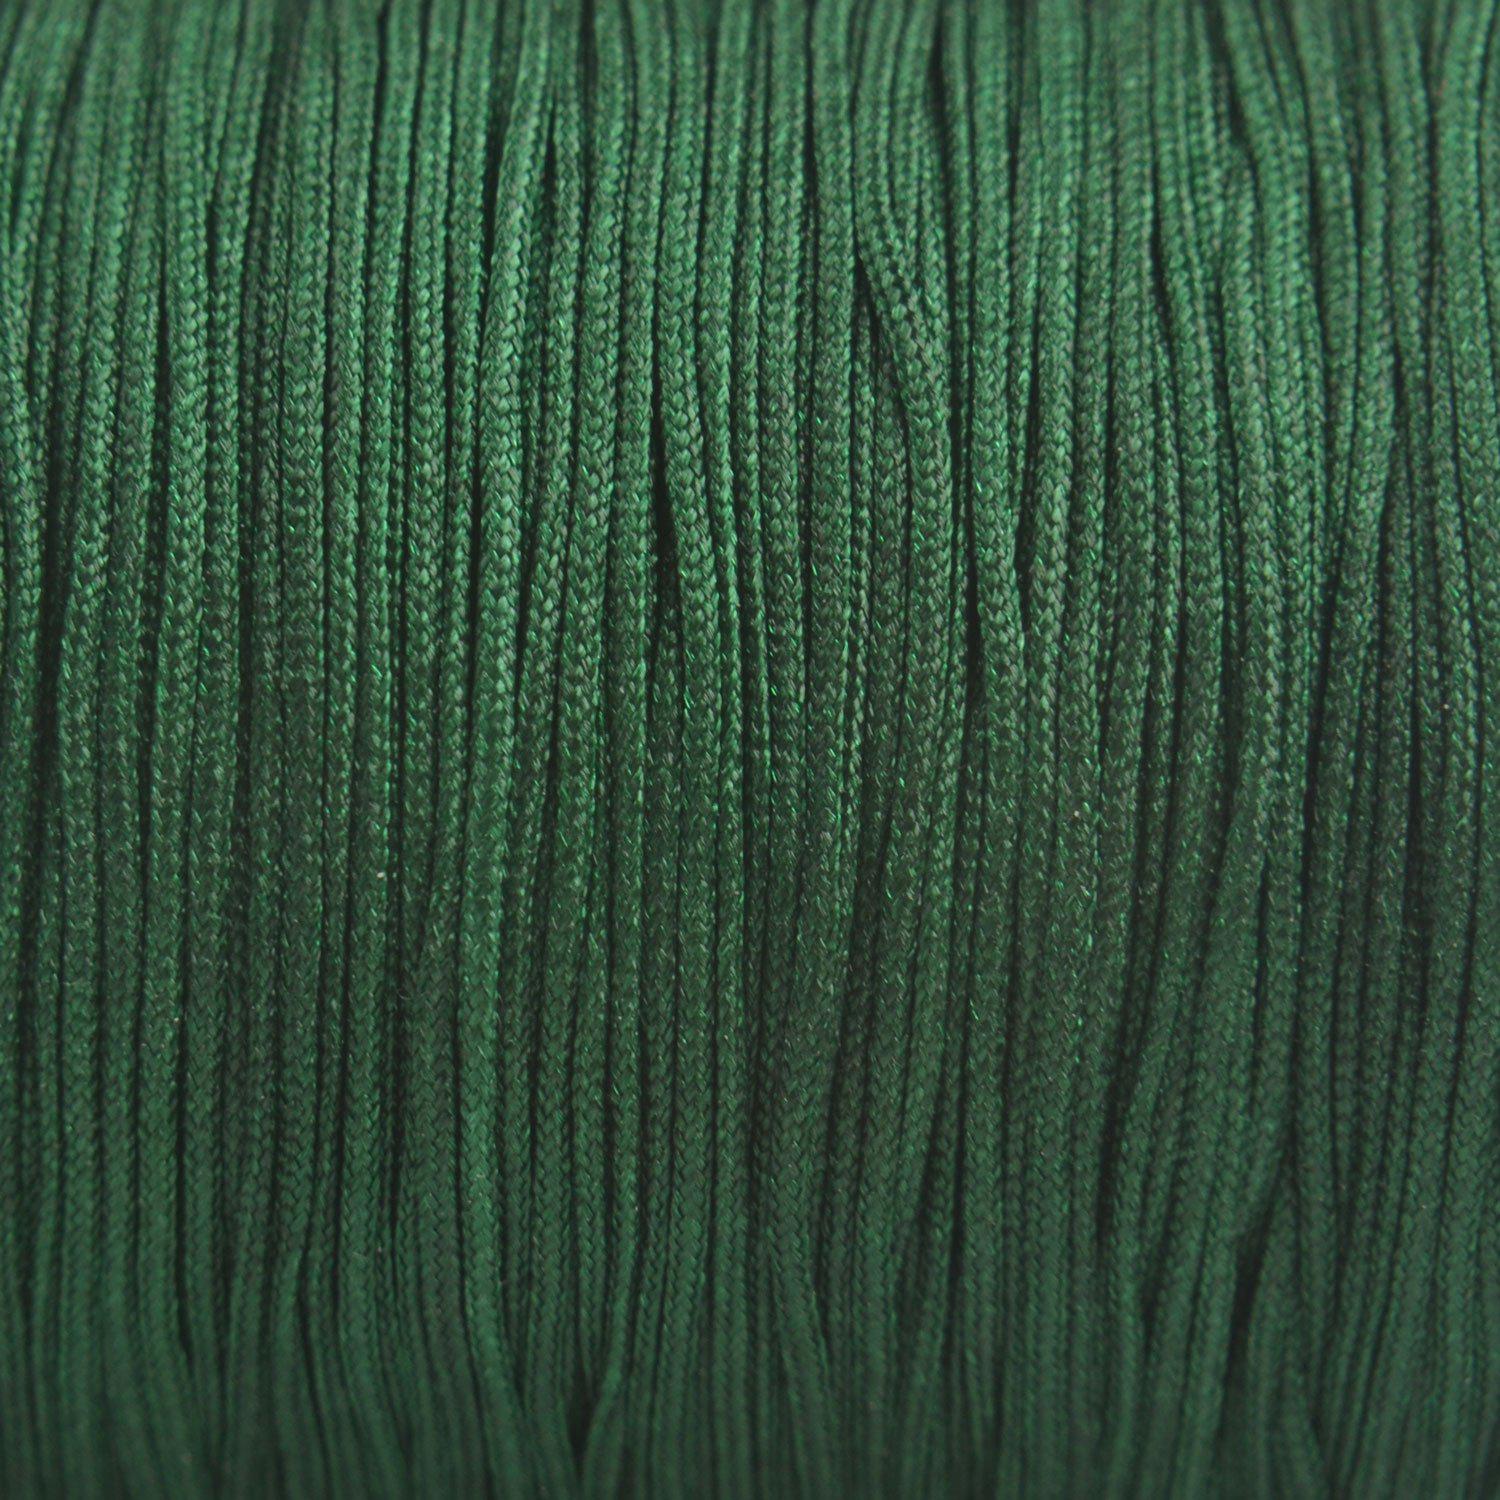 Nylon koord donker groen 0.8mm - 6 meter-Kraaltjes van Renate